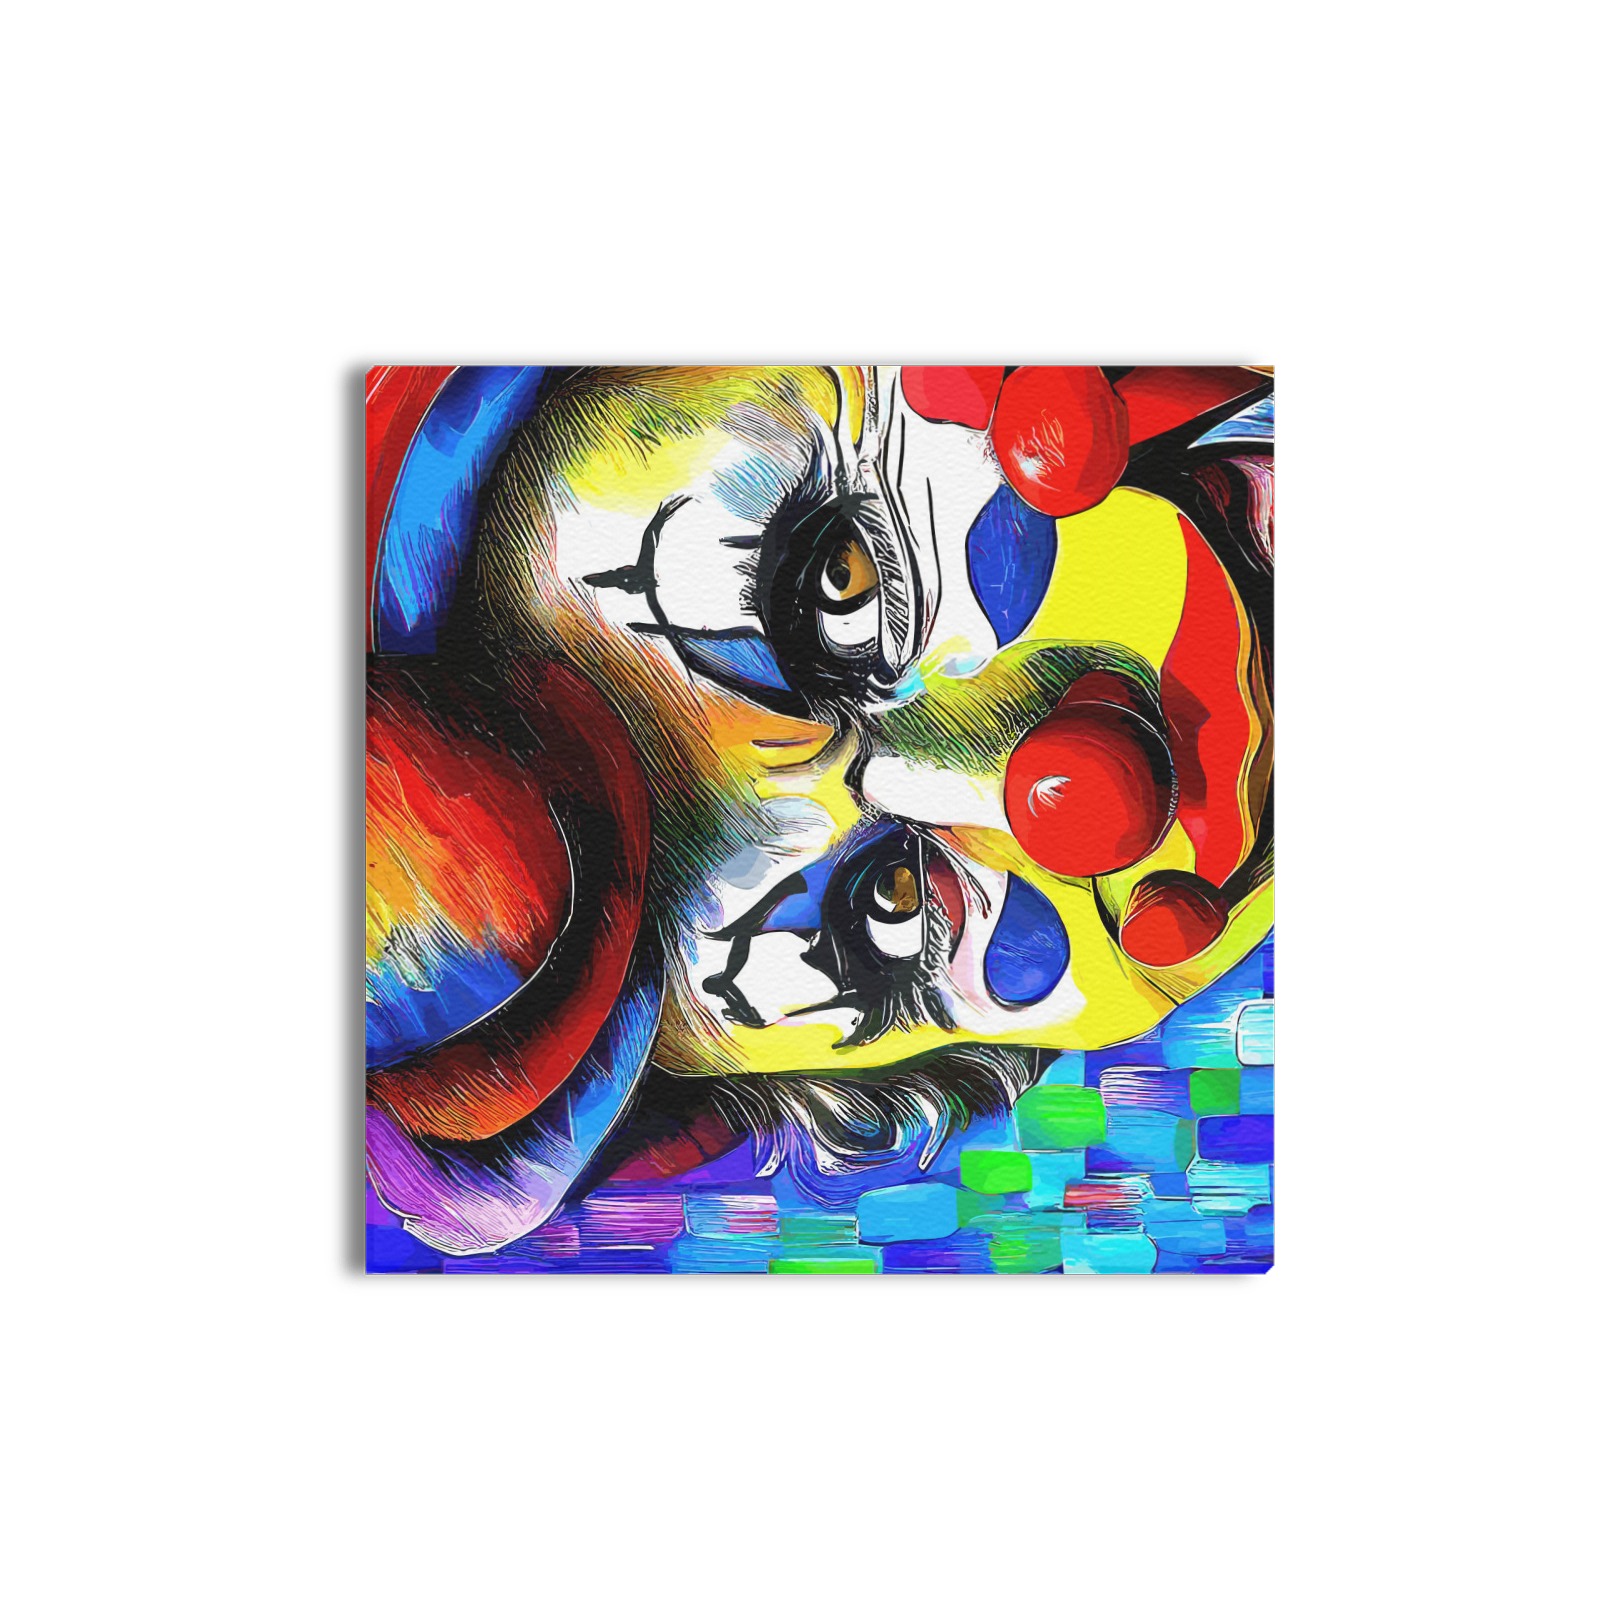 clown-003 Upgraded Canvas Print 16"x16"